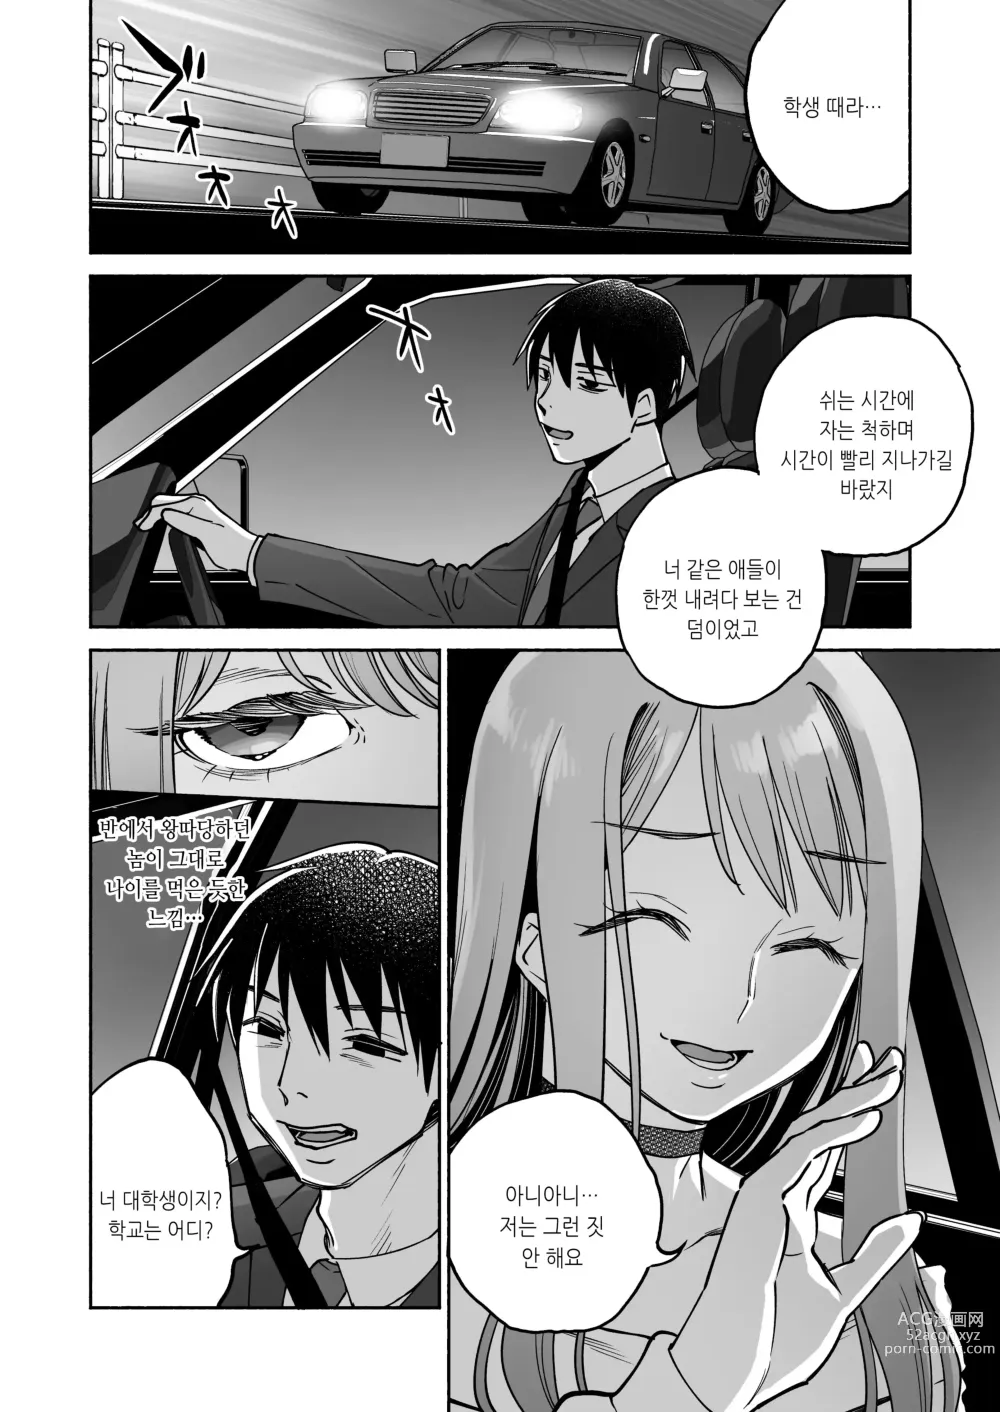 Page 9 of doujinshi 학력, 외모 무엇이든 뒤떨어지는 아저씨 전용 오나홀이 되었습니다.